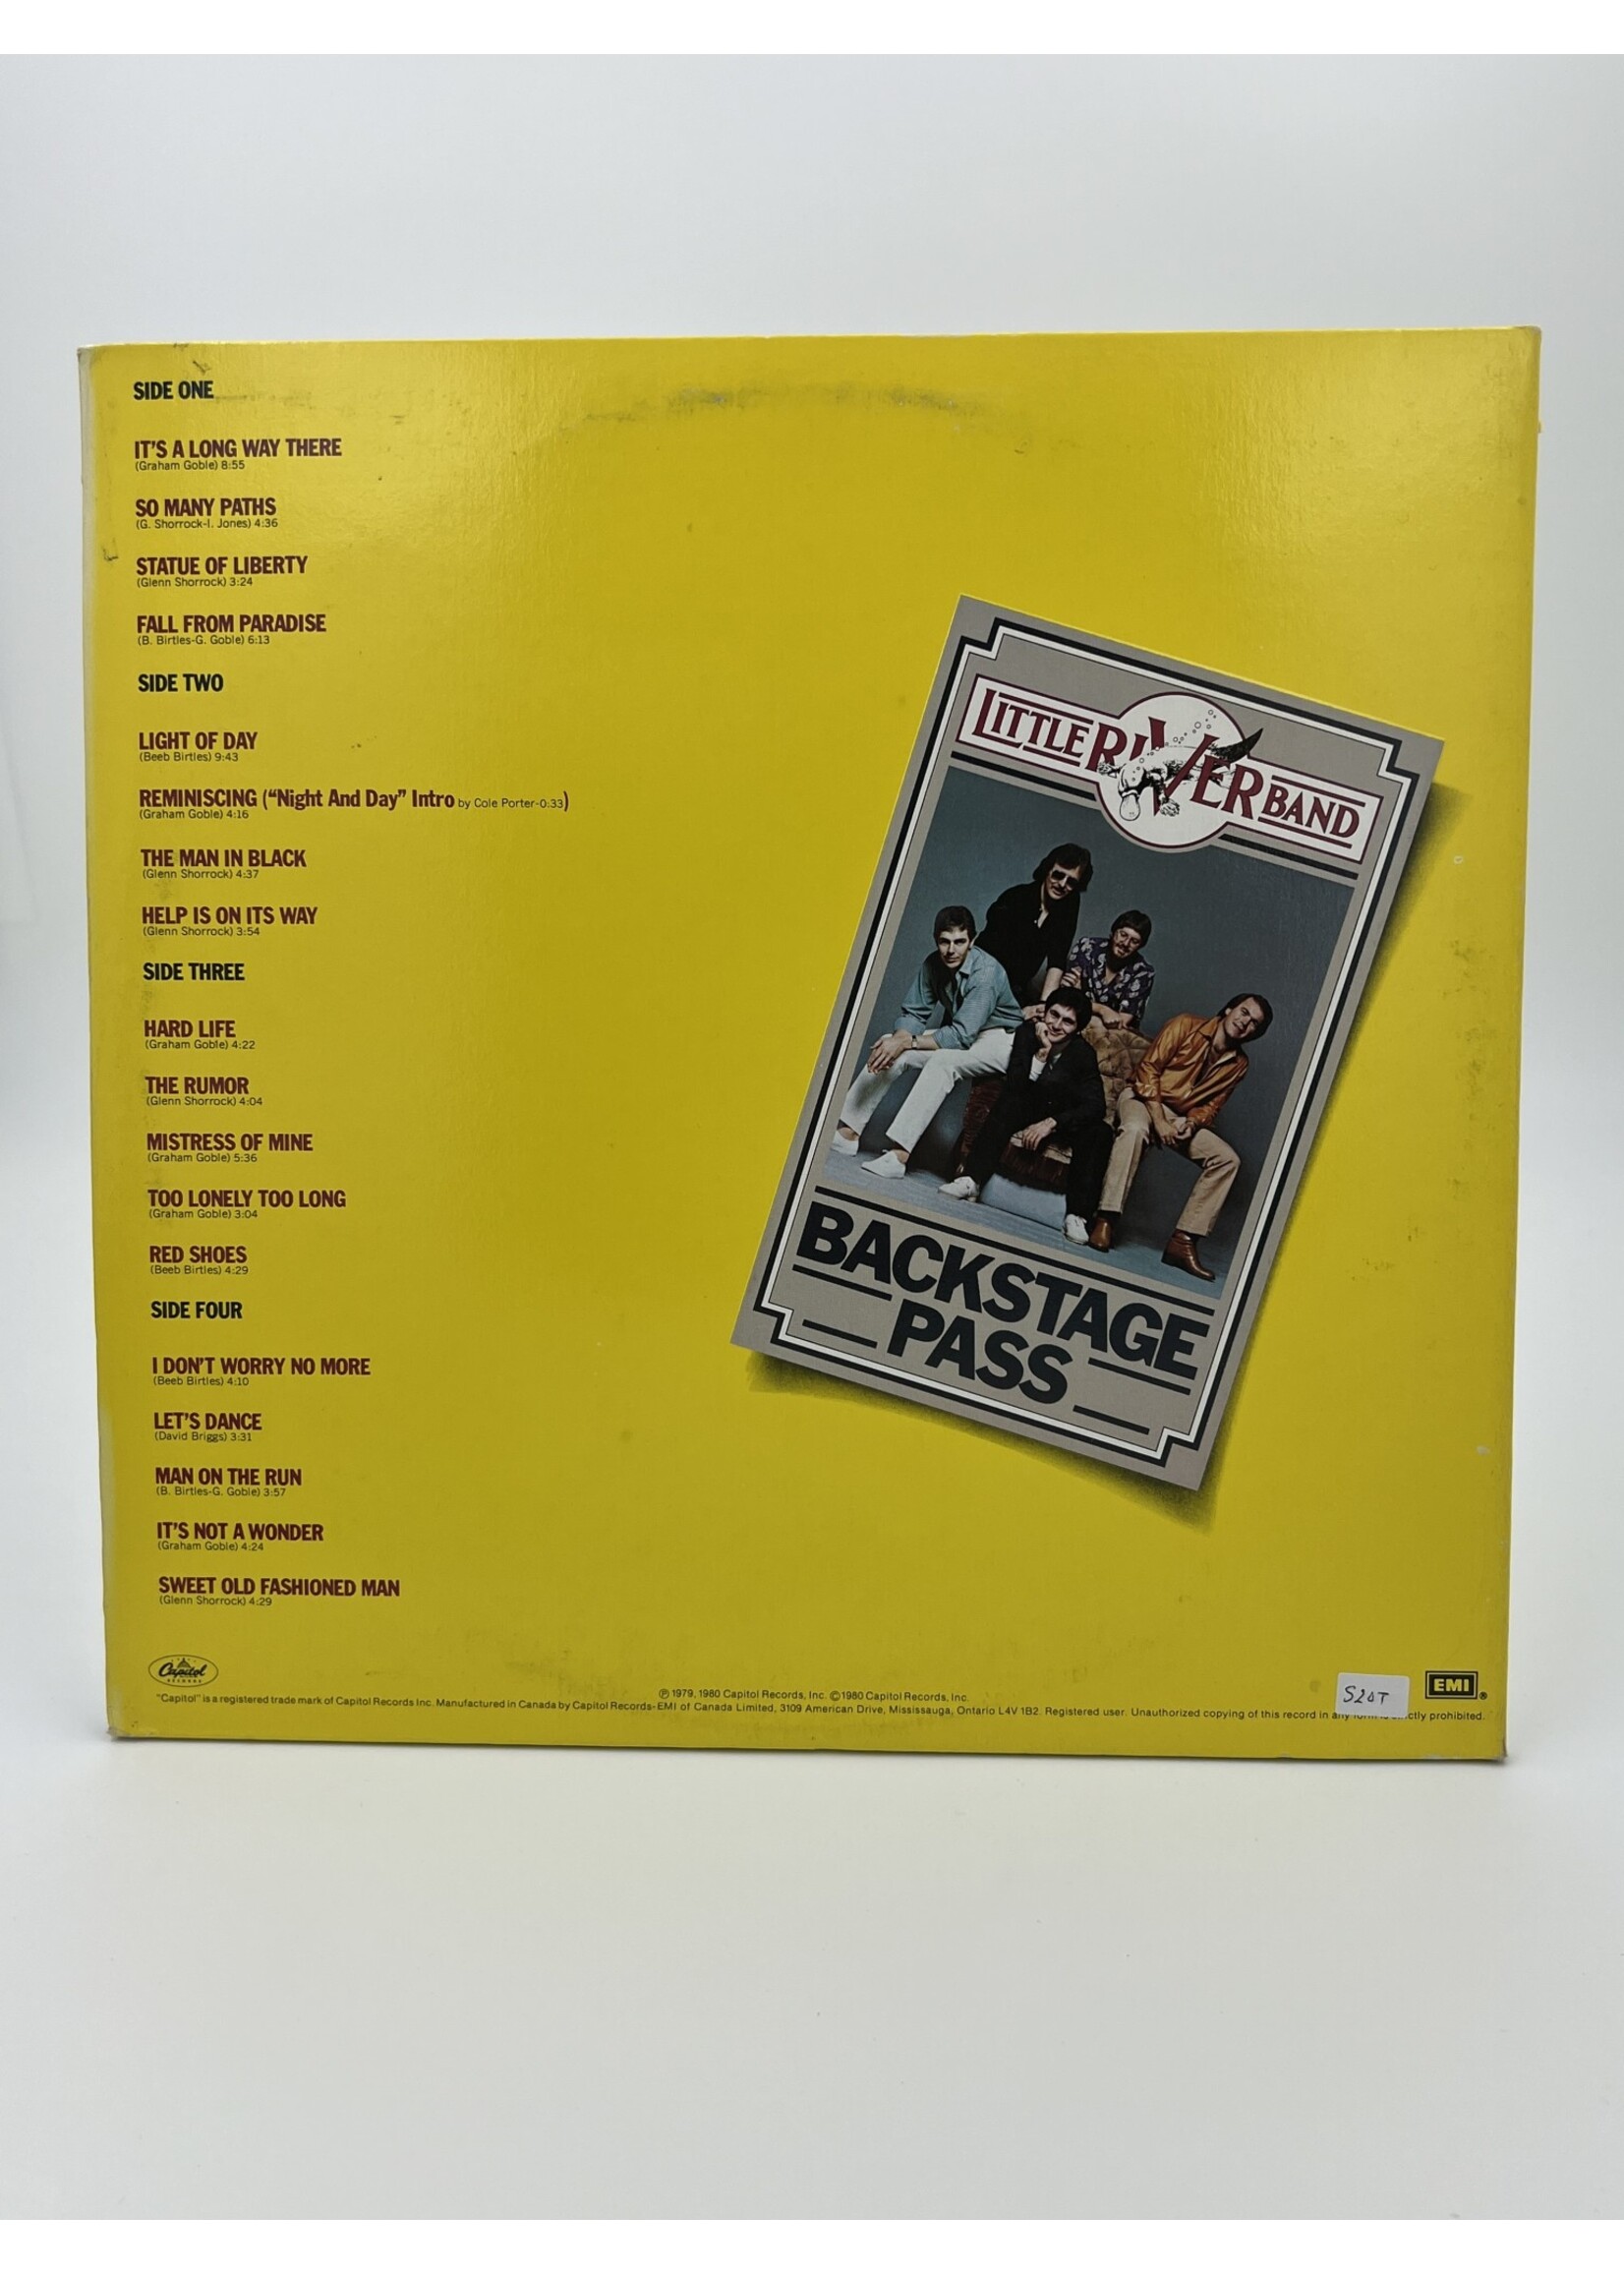 LP   Little River Band Backstage Pass 2 LP Record